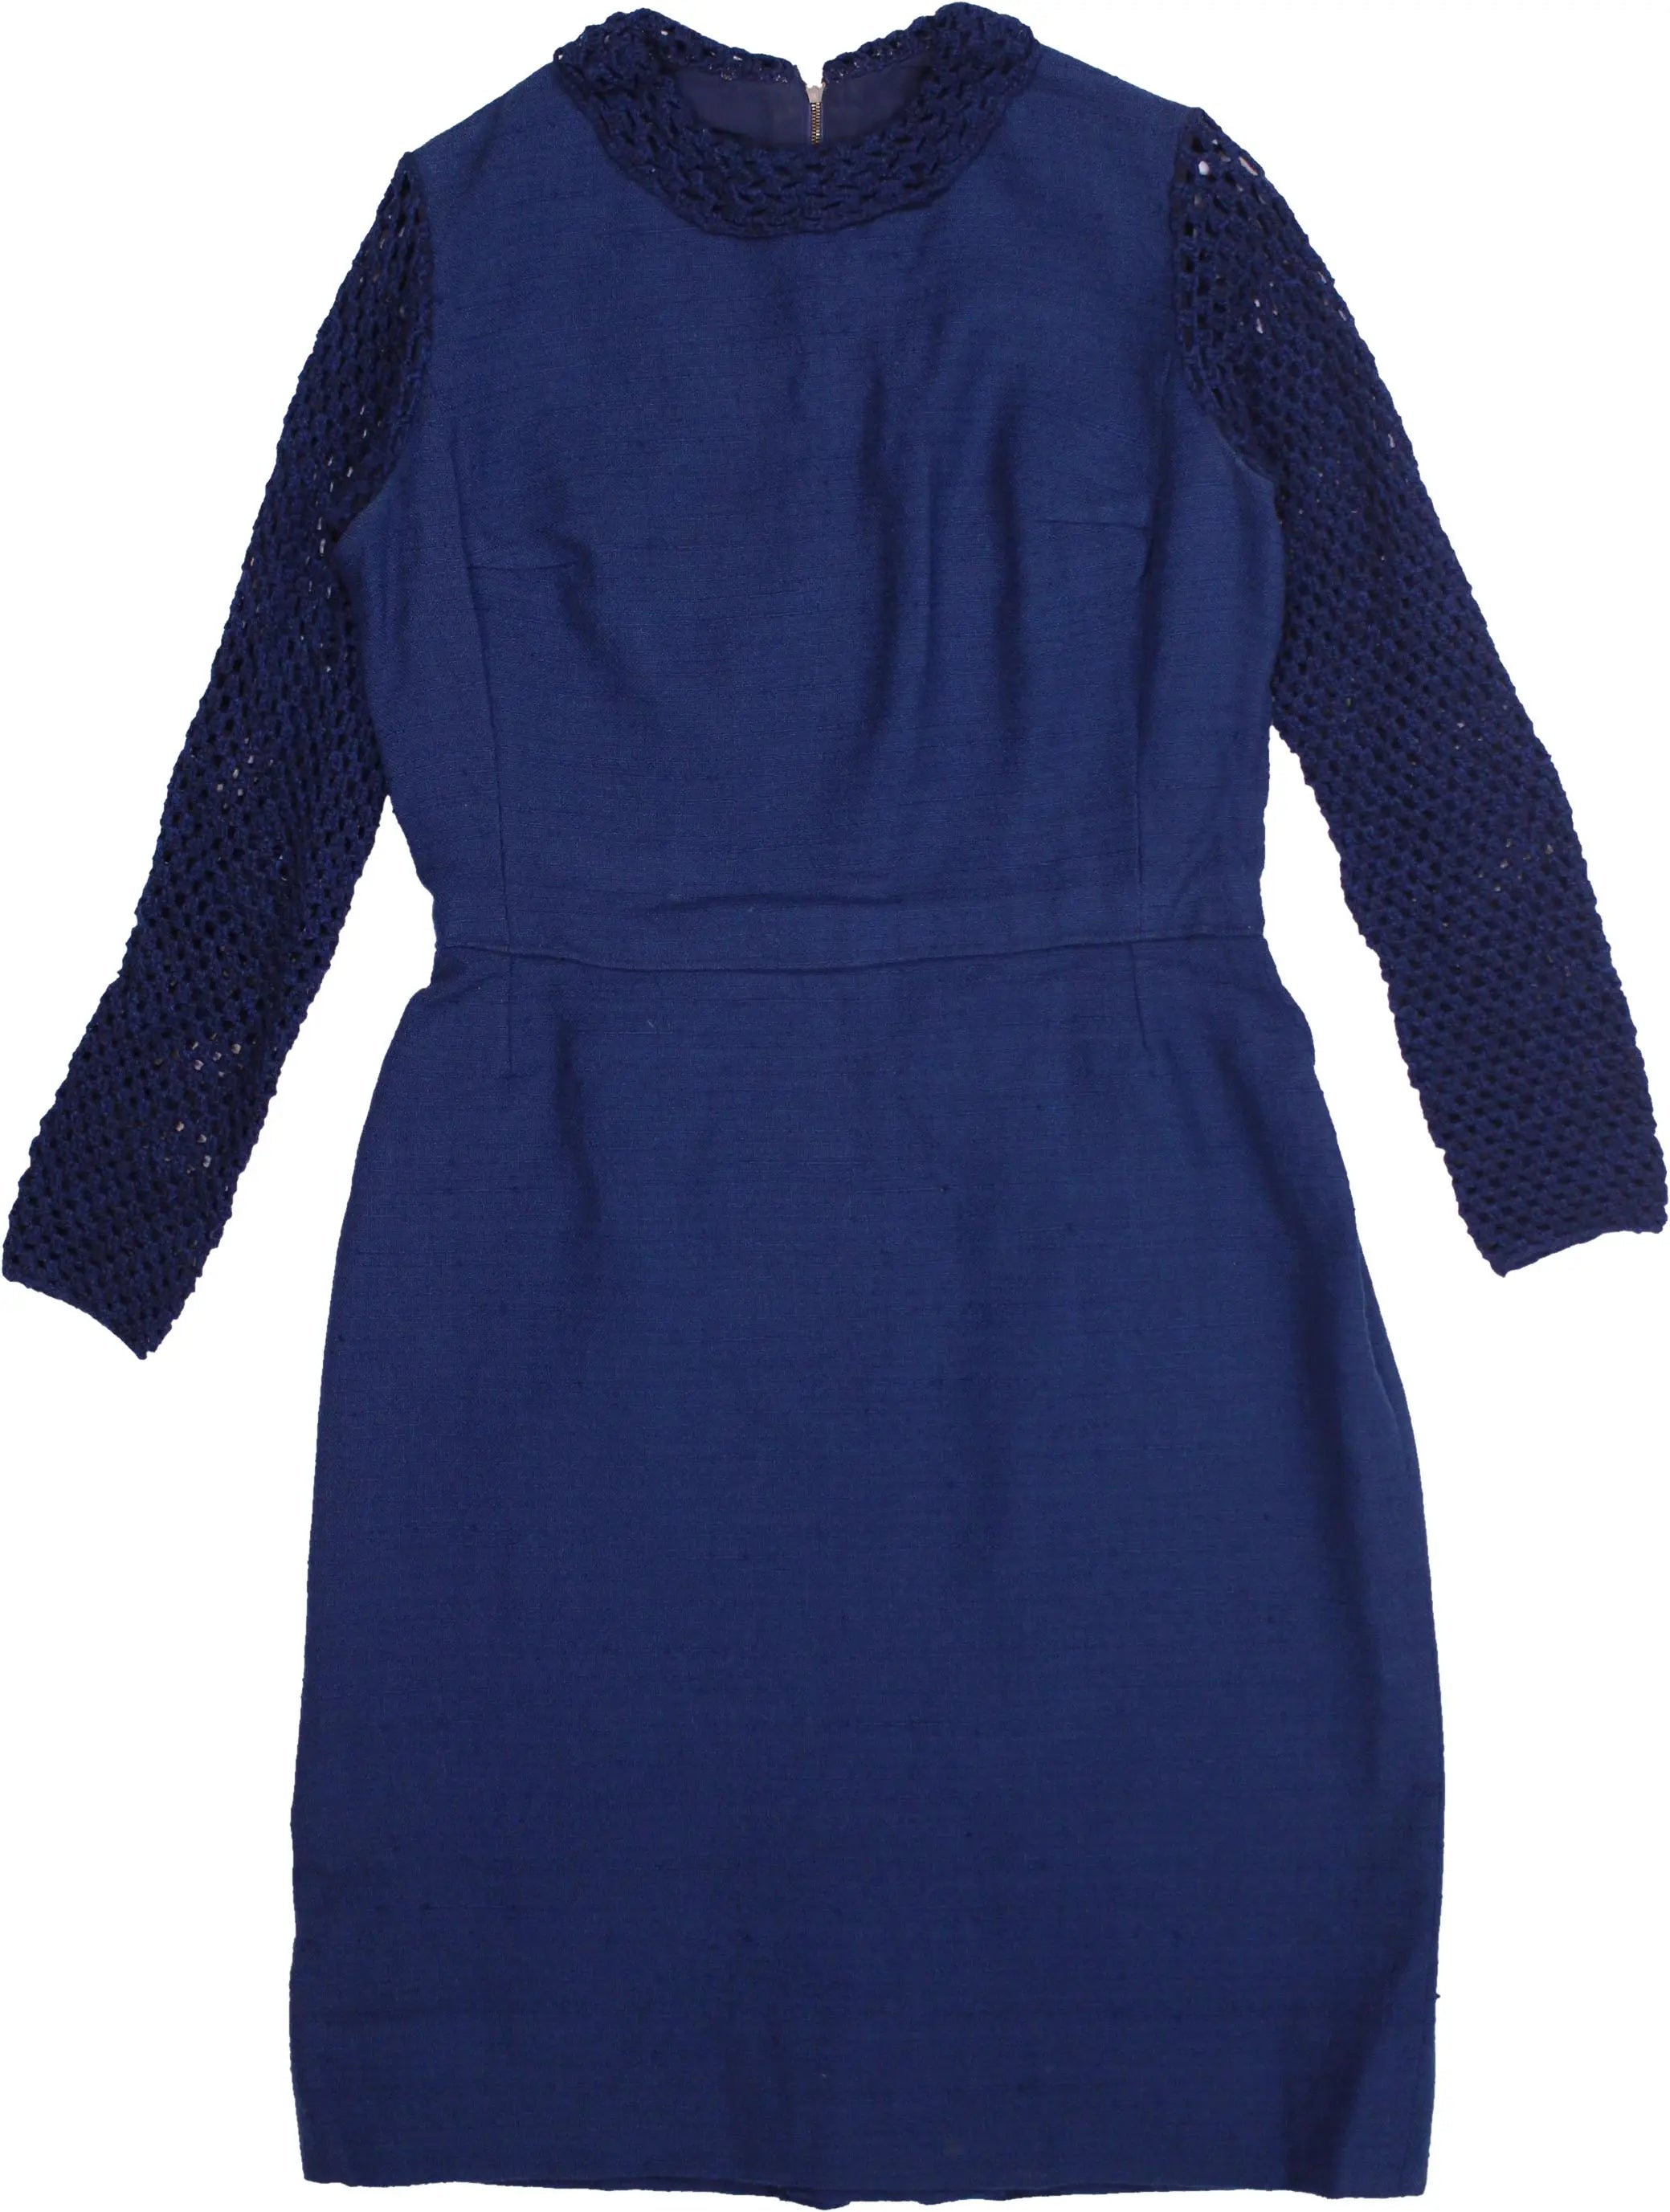 Handmade - Handmade Navy Blue Dress- ThriftTale.com - Vintage and second handclothing